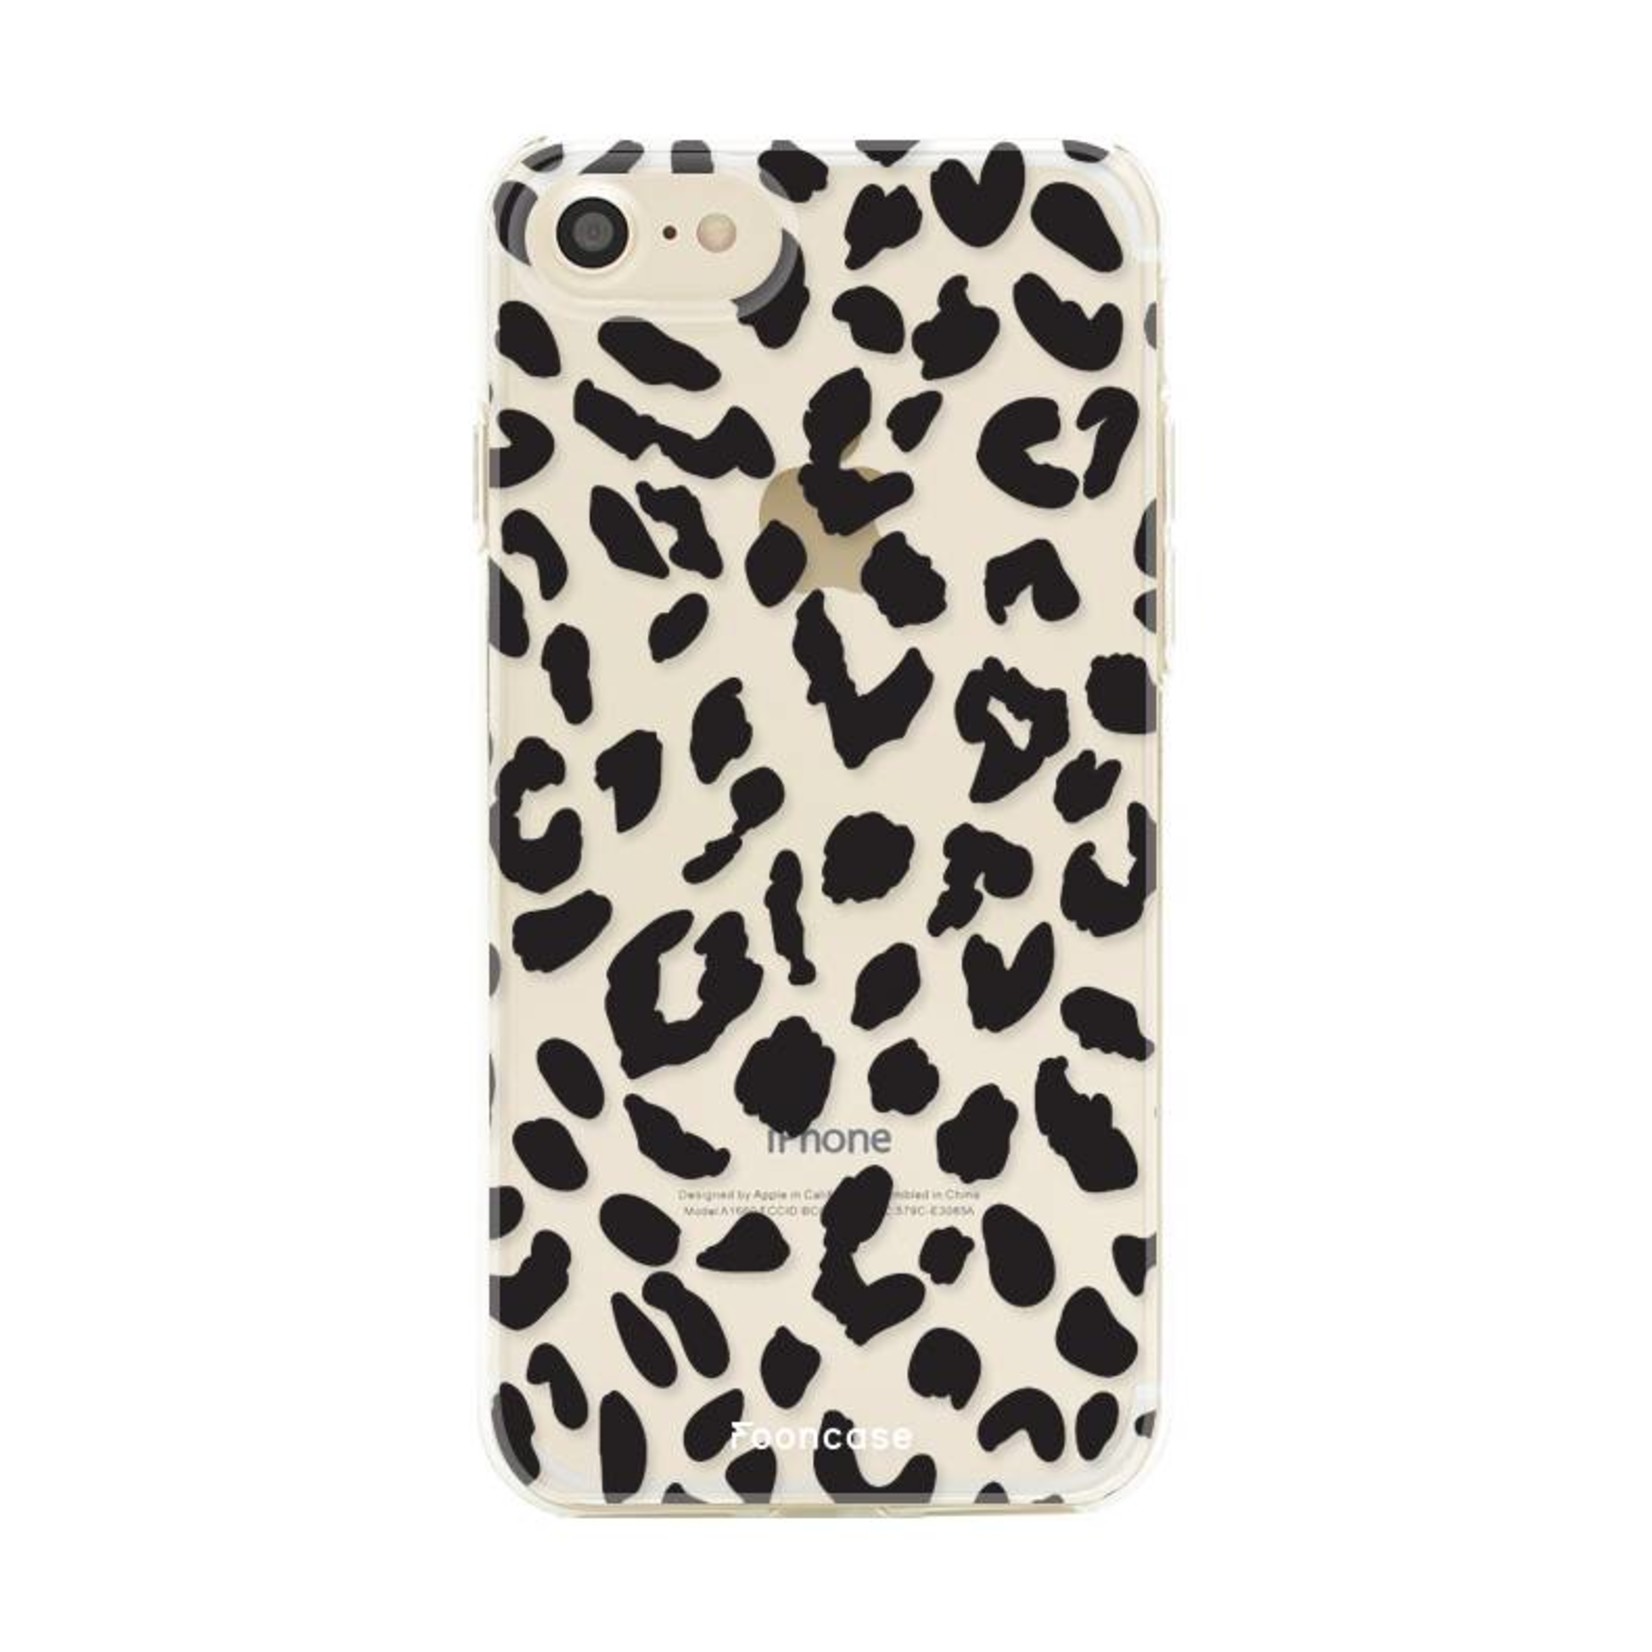 FOONCASE iPhone SE (2020) hoesje TPU Soft Case - Back Cover - Luipaard / Leopard print